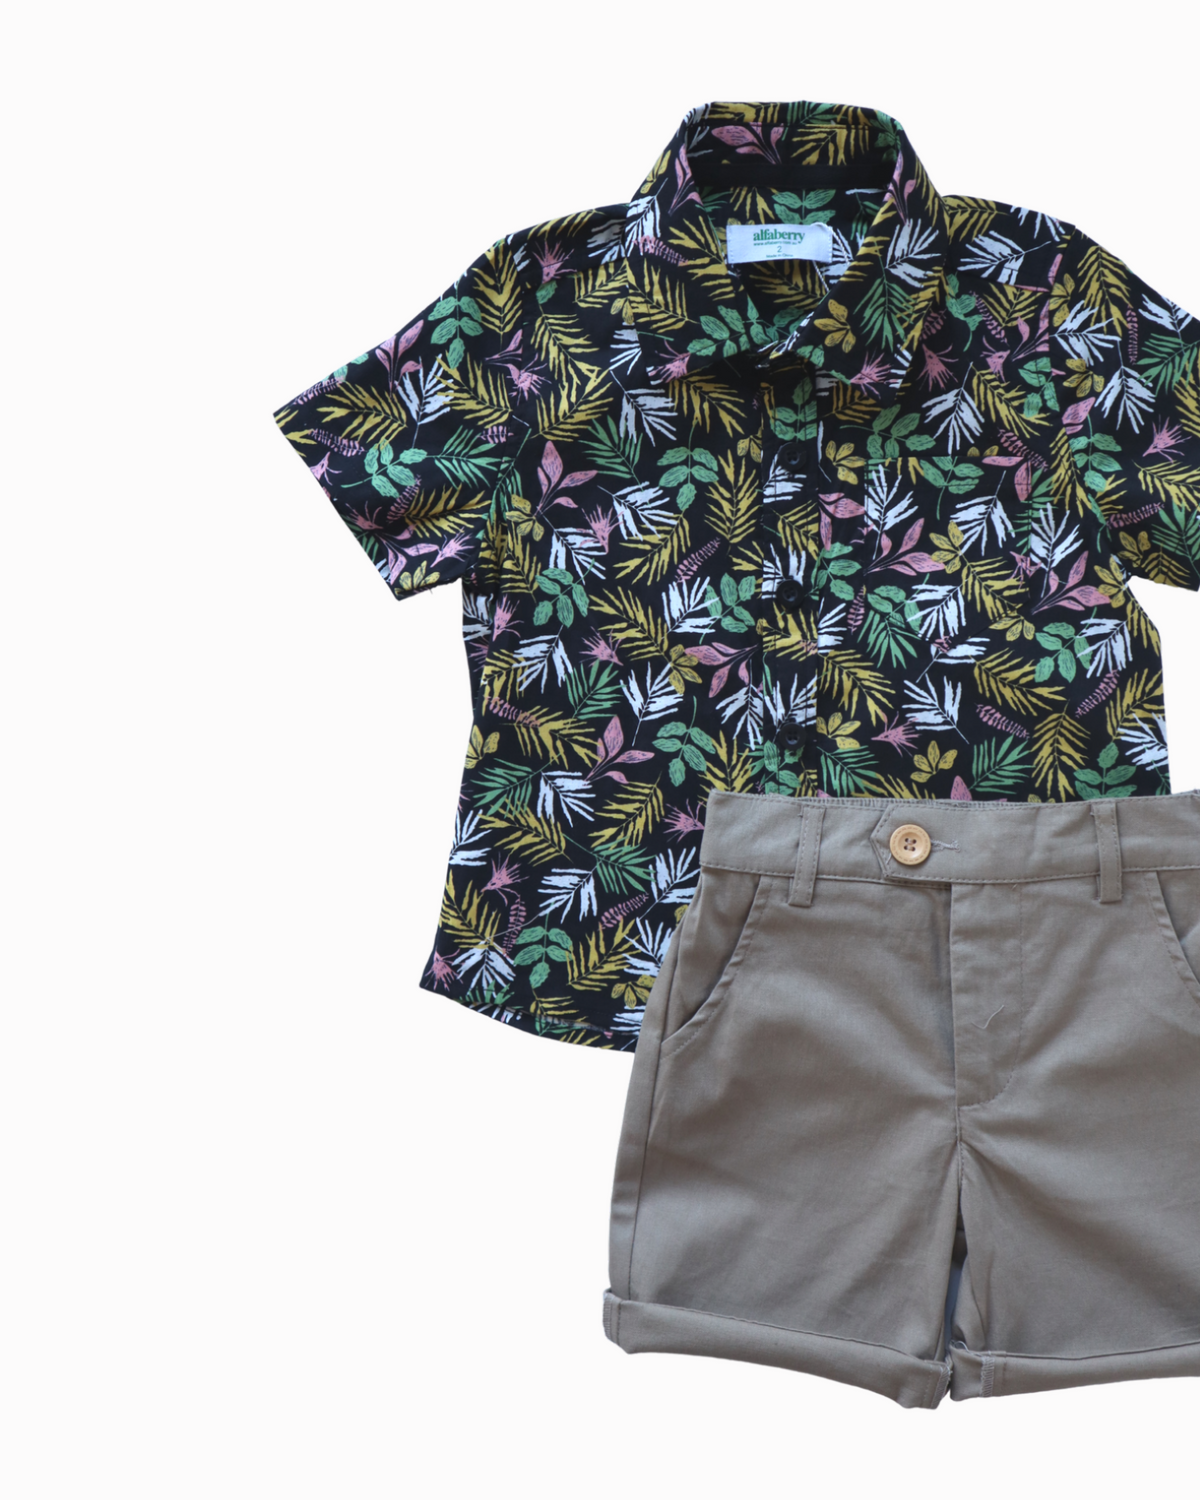 Ferns and Fronds Button Up Shirt